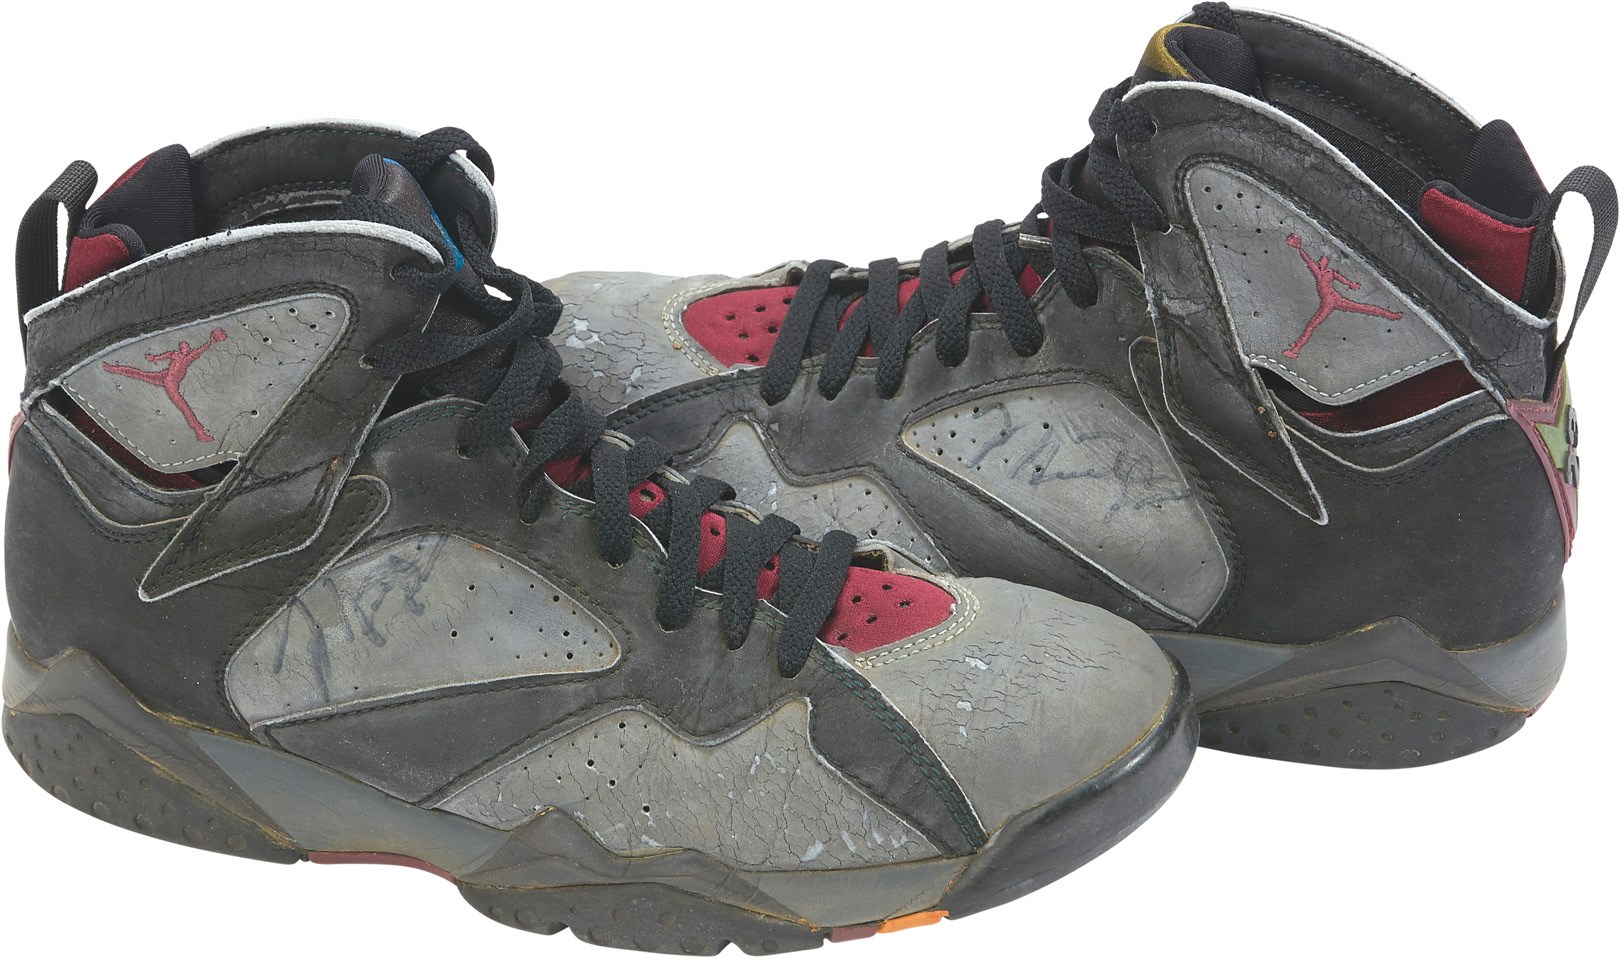 1992 Michael Jordan Signed "Make a Wish" Sneakers w/Exact Proof of Signing (JSA)